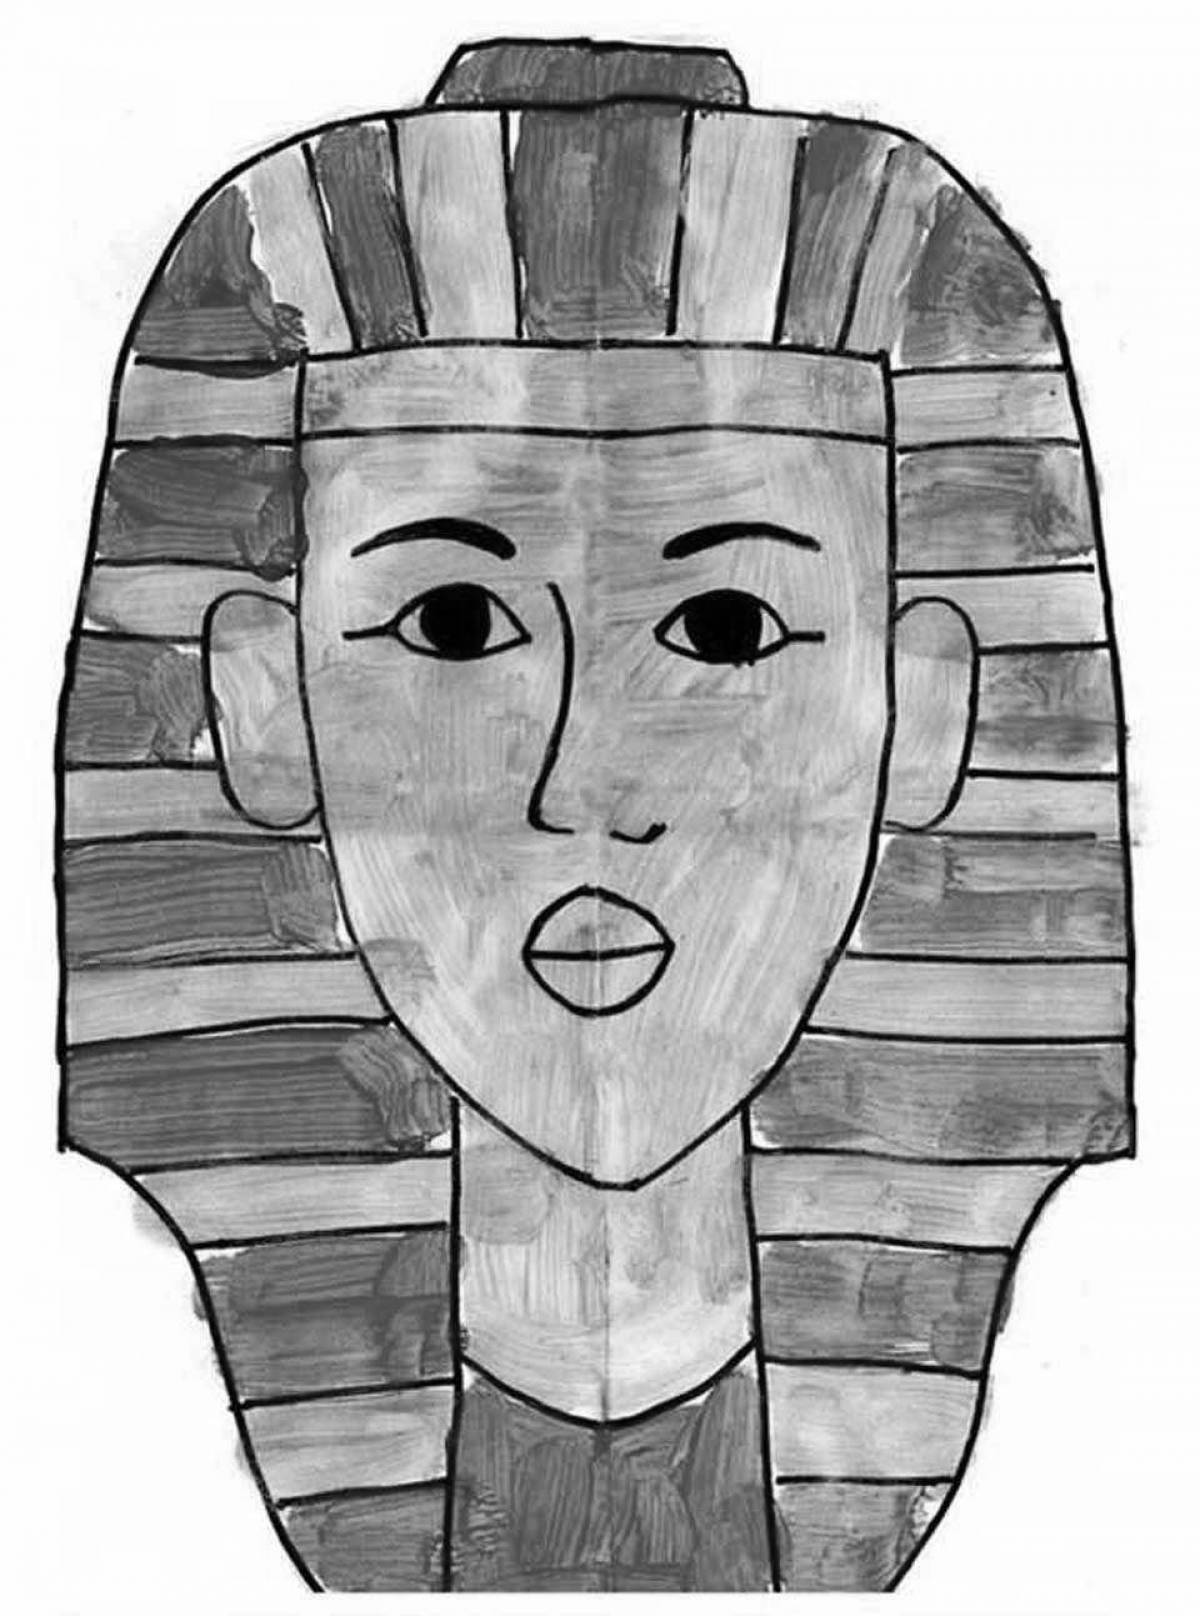 Coloring book grandiose mask of Pharaoh Tutankhamun